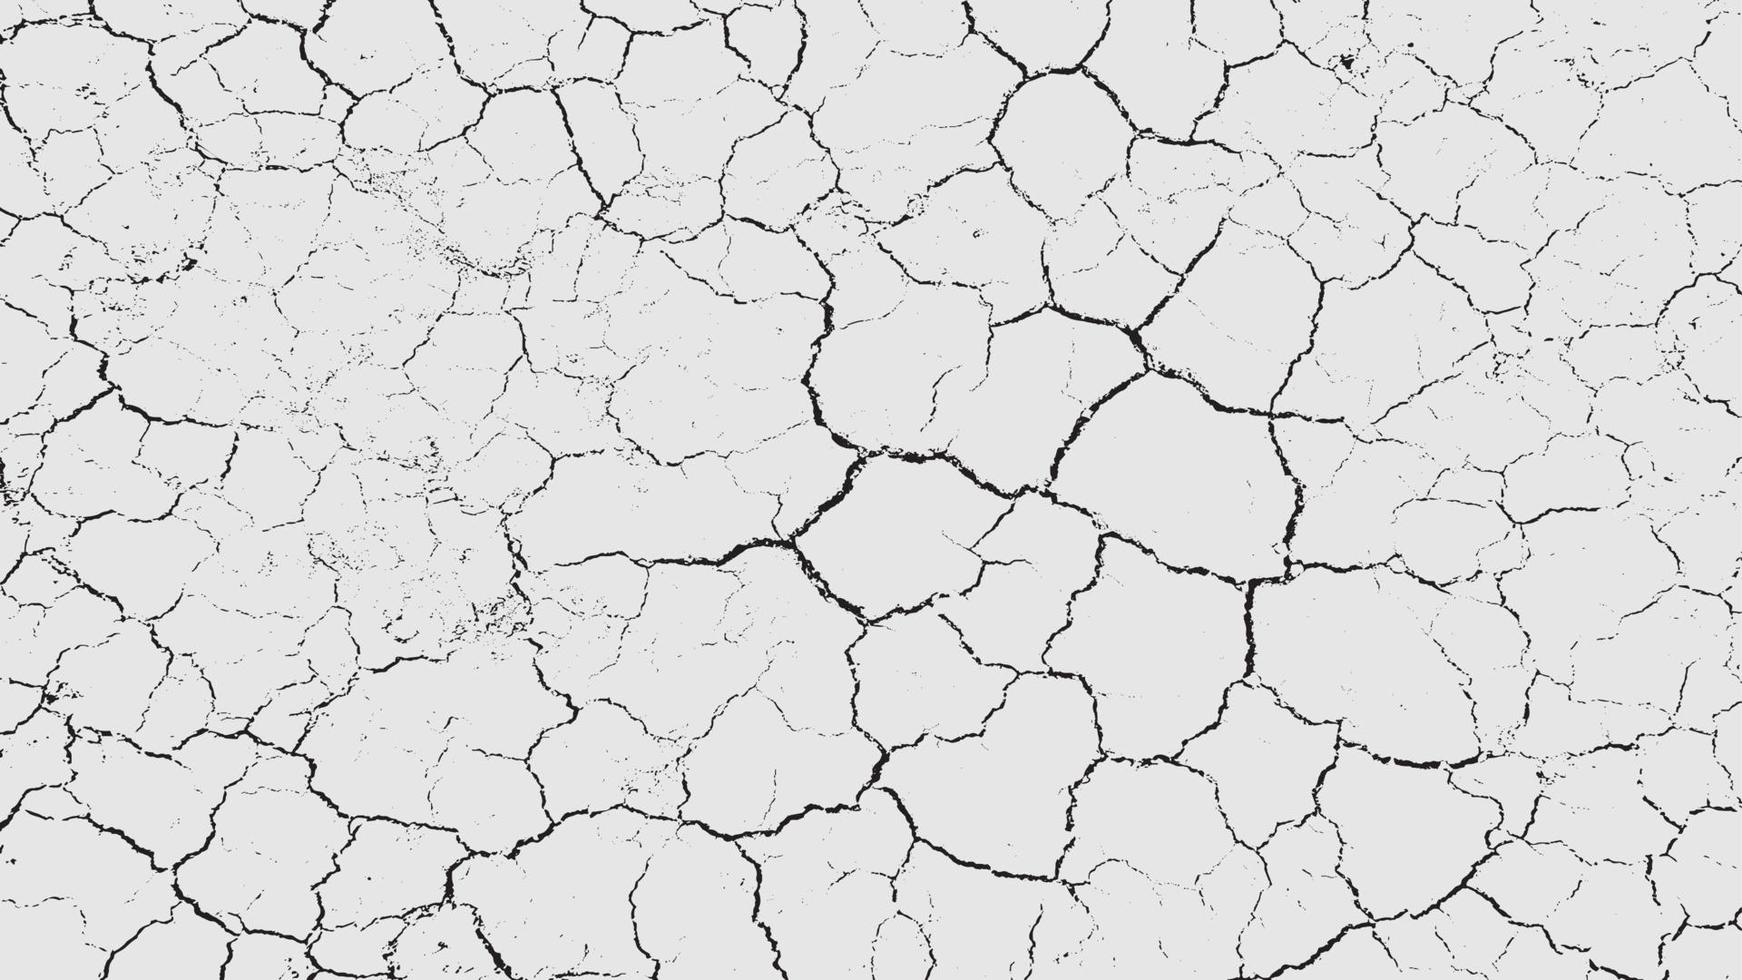 suelo seco grietas rayado grunge fondo urbano textura vector polvo superposición angustia granulado efecto grungy telón de fondo angustiado ilustración vectorial aislado negro sobre fondo blanco